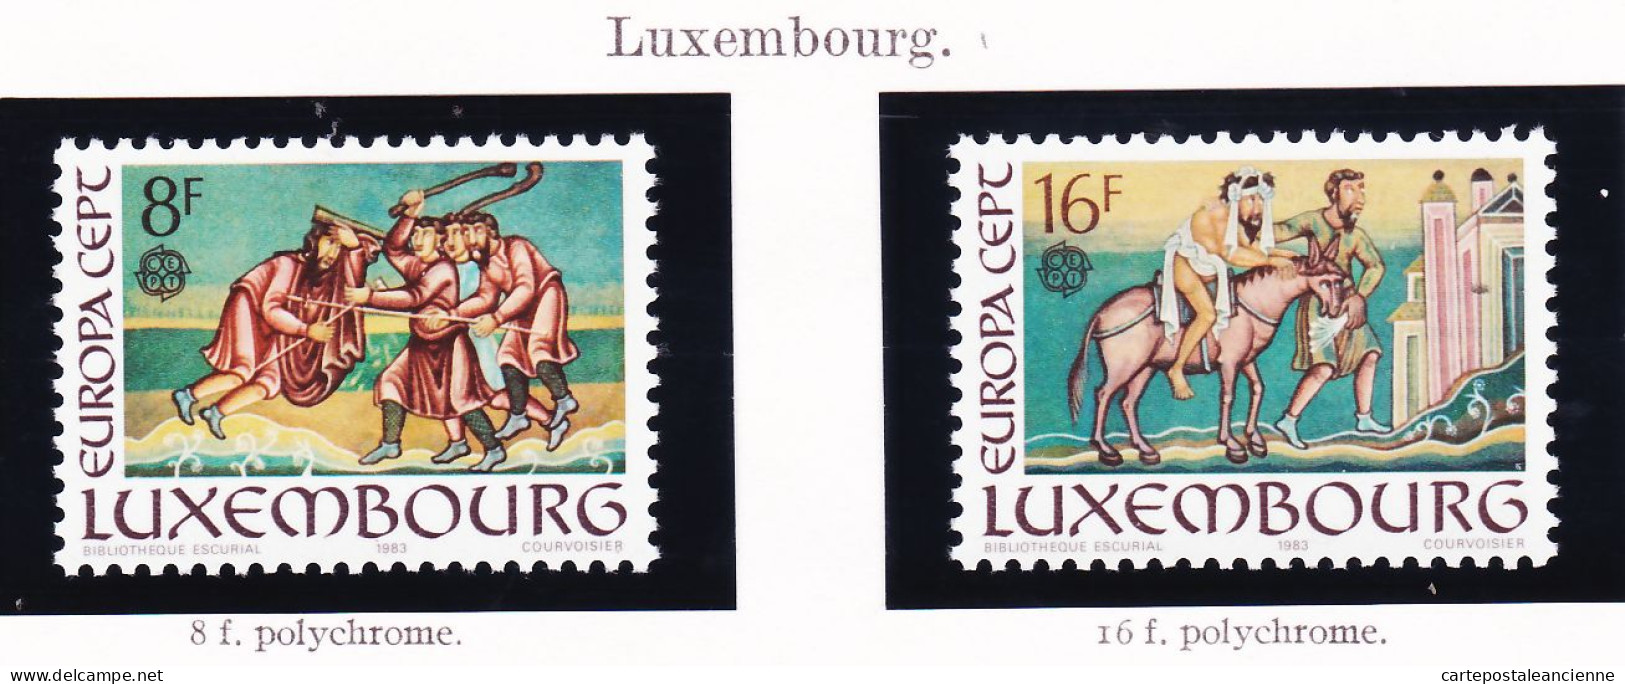 28258 / CEPT EUROPA 1983 LUXEMBOURG Luxemburg Yvert-Tellier N° 1024 / 1025 MICHEL N° 1074 / 1075  ** MNH C.E.P.T - 1983